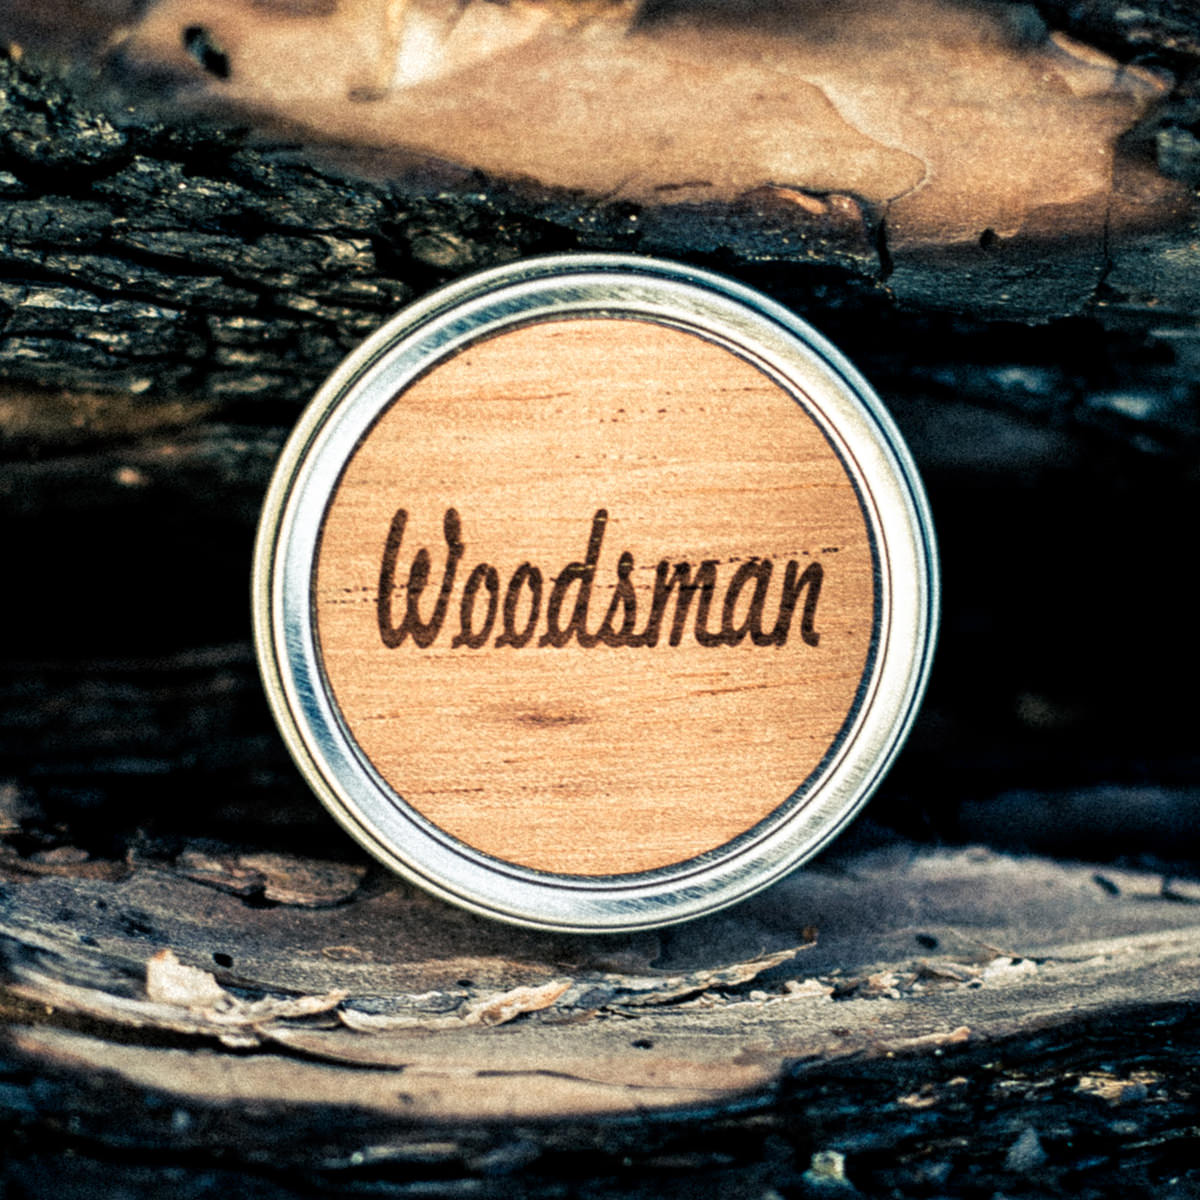 Common Uses for Pine Needles - Woodsman Inc.